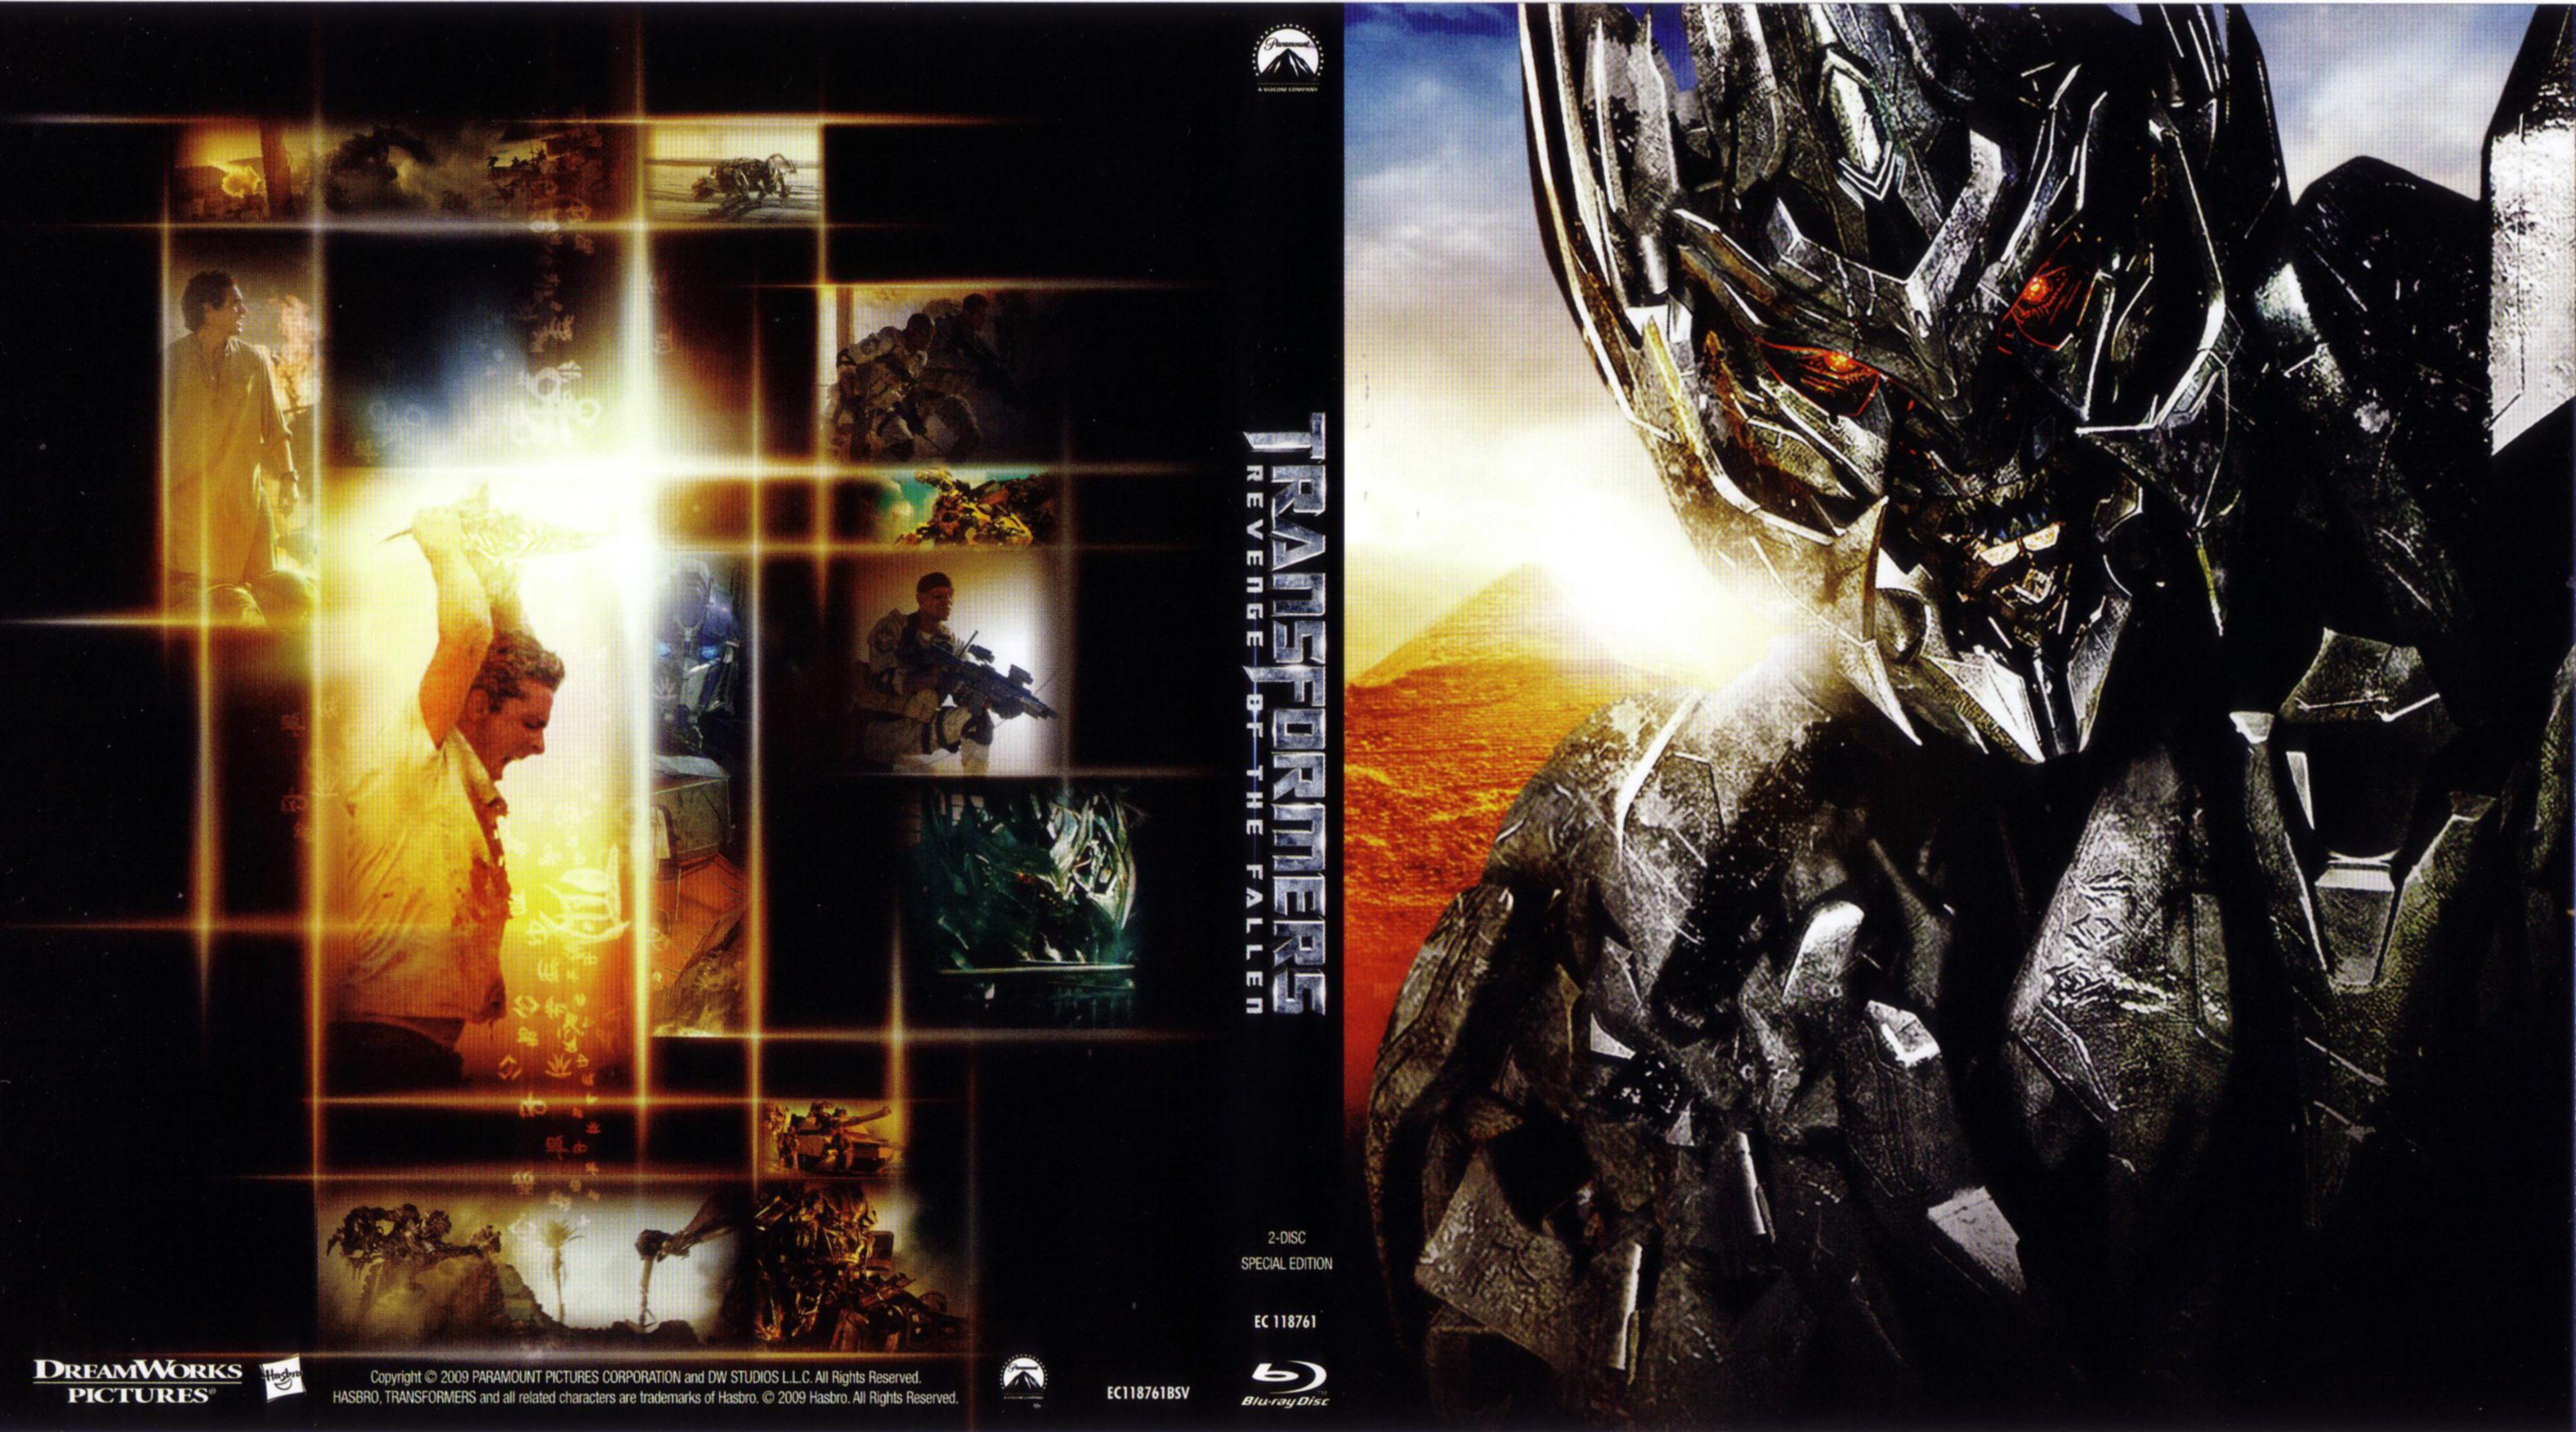 Jaquette DVD Transformers 2 (BLU-RAY)